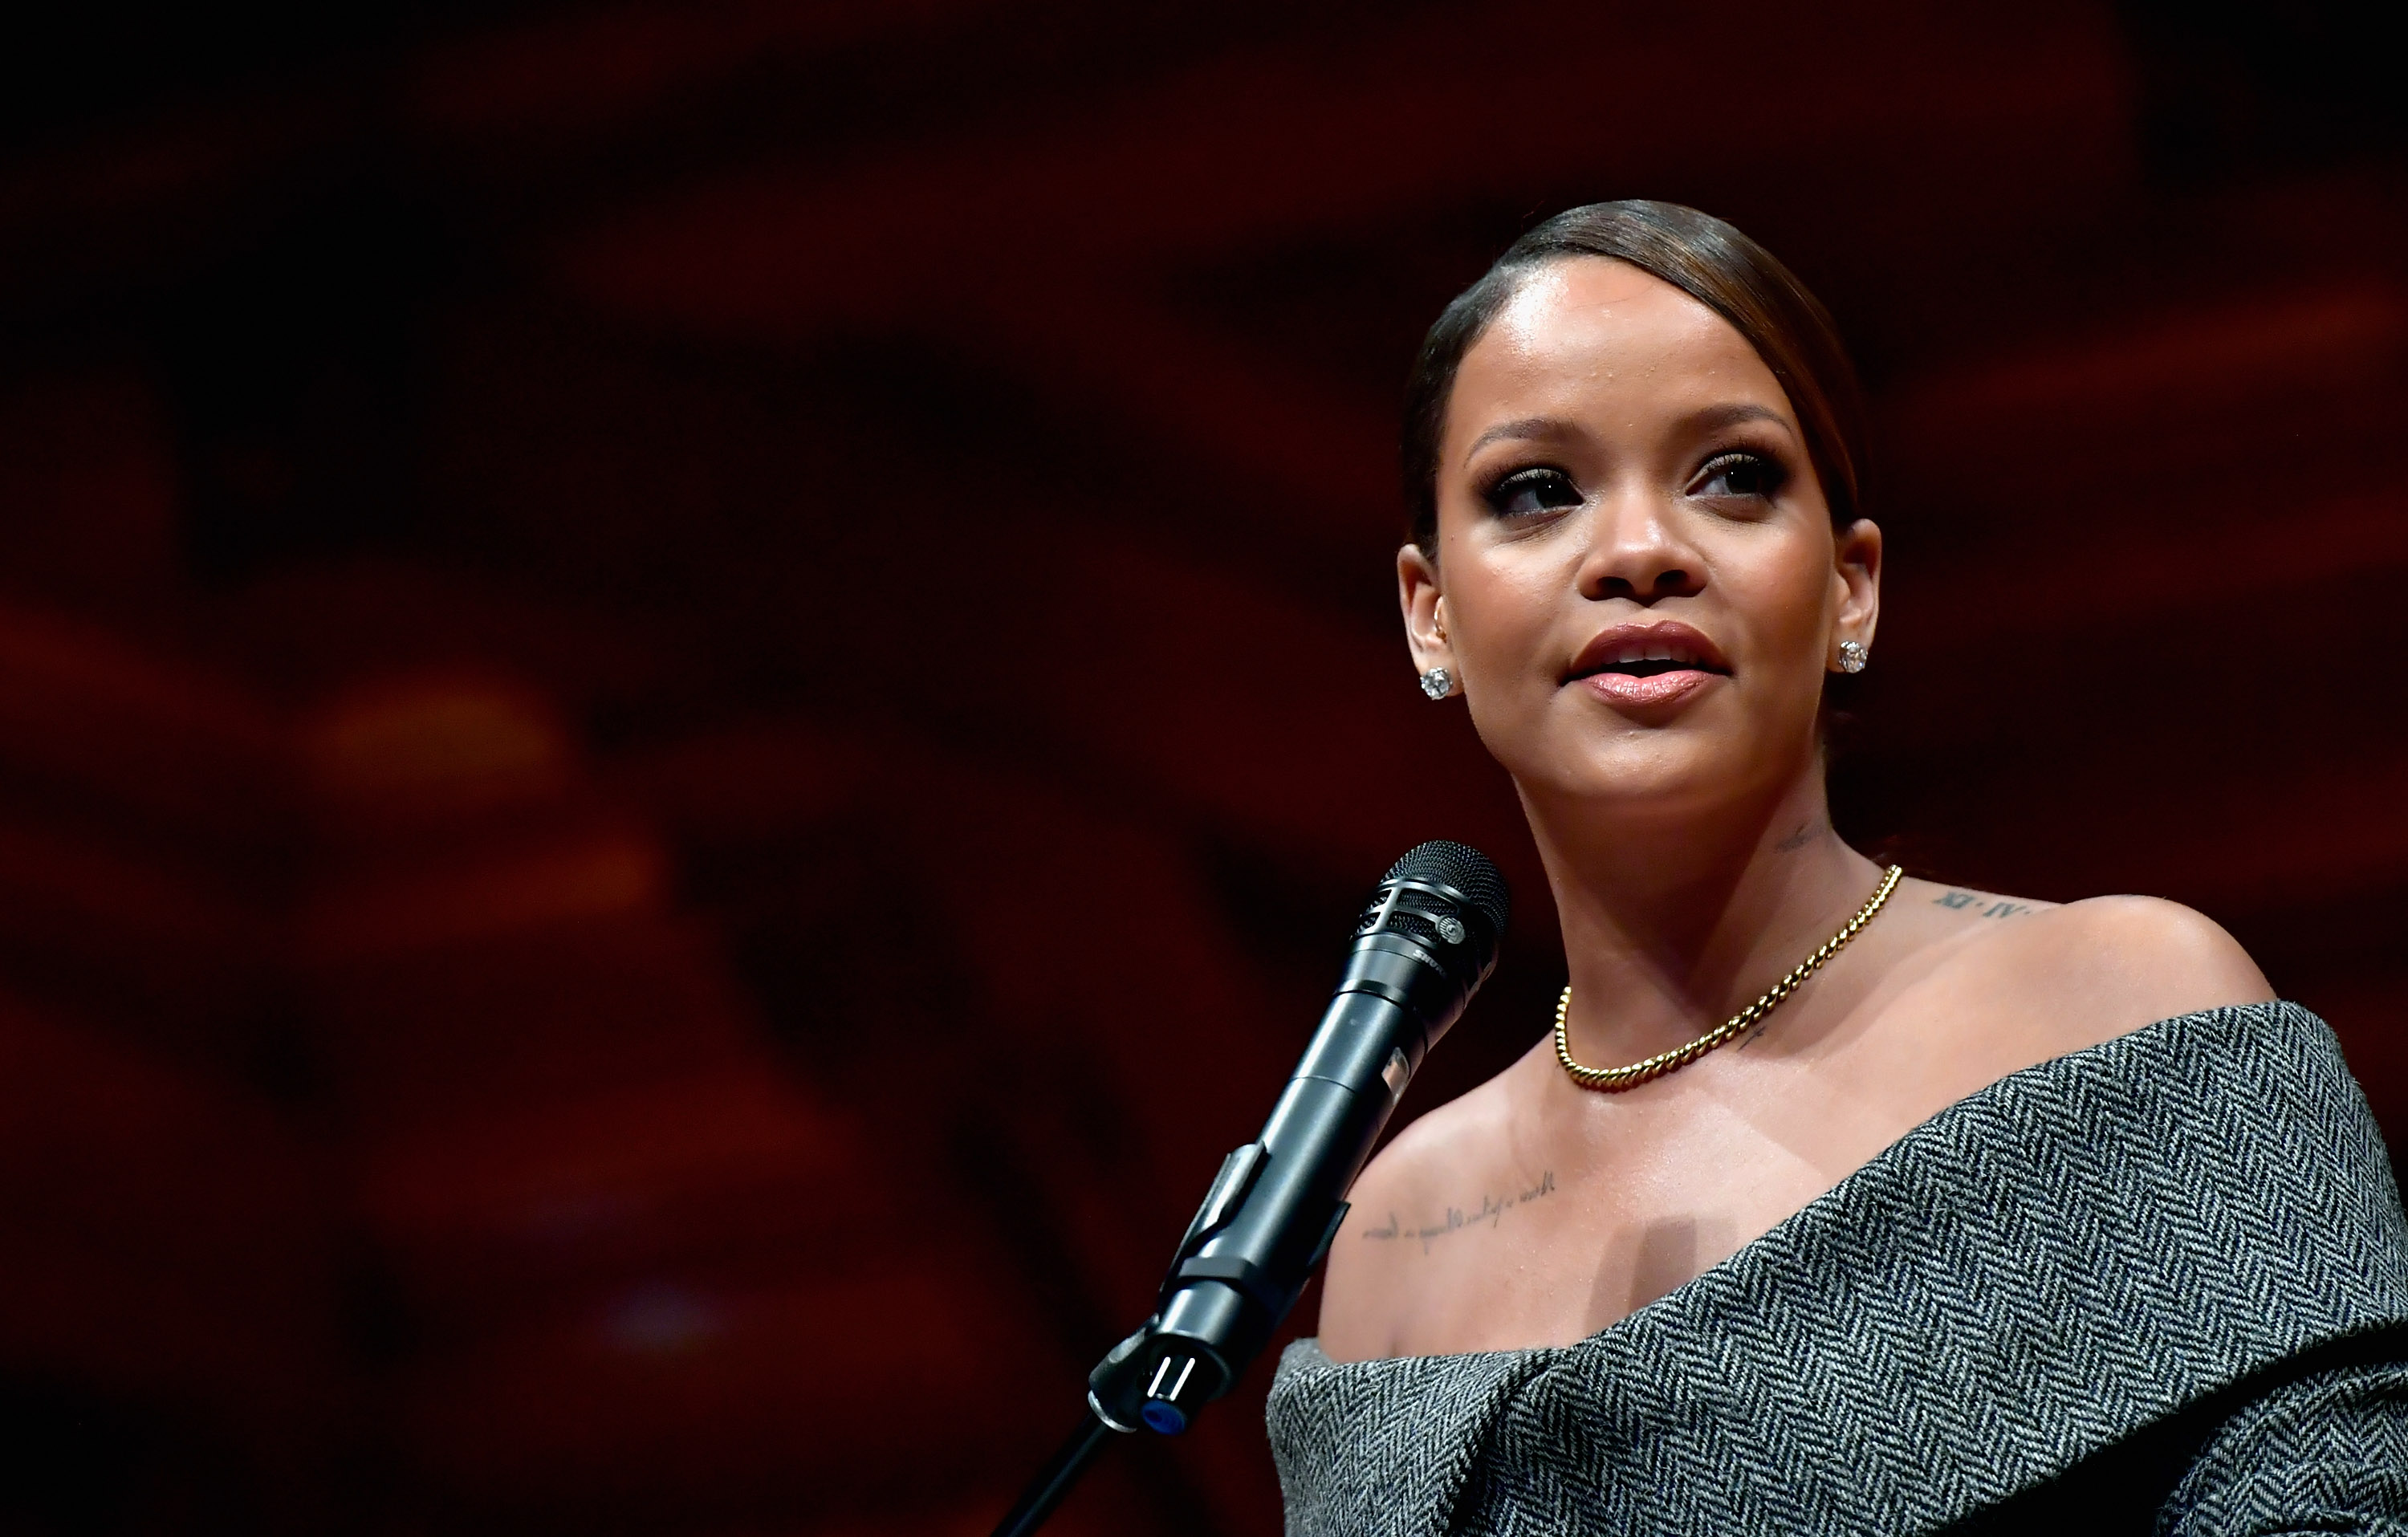 Rihanna receives the 2017 Harvard University Humanitarian of the Year Award at Harvard University's Sanders Theatre on February 28, 2017 in Cambridge, Massachusetts. (Paul Marotta—Getty Images)